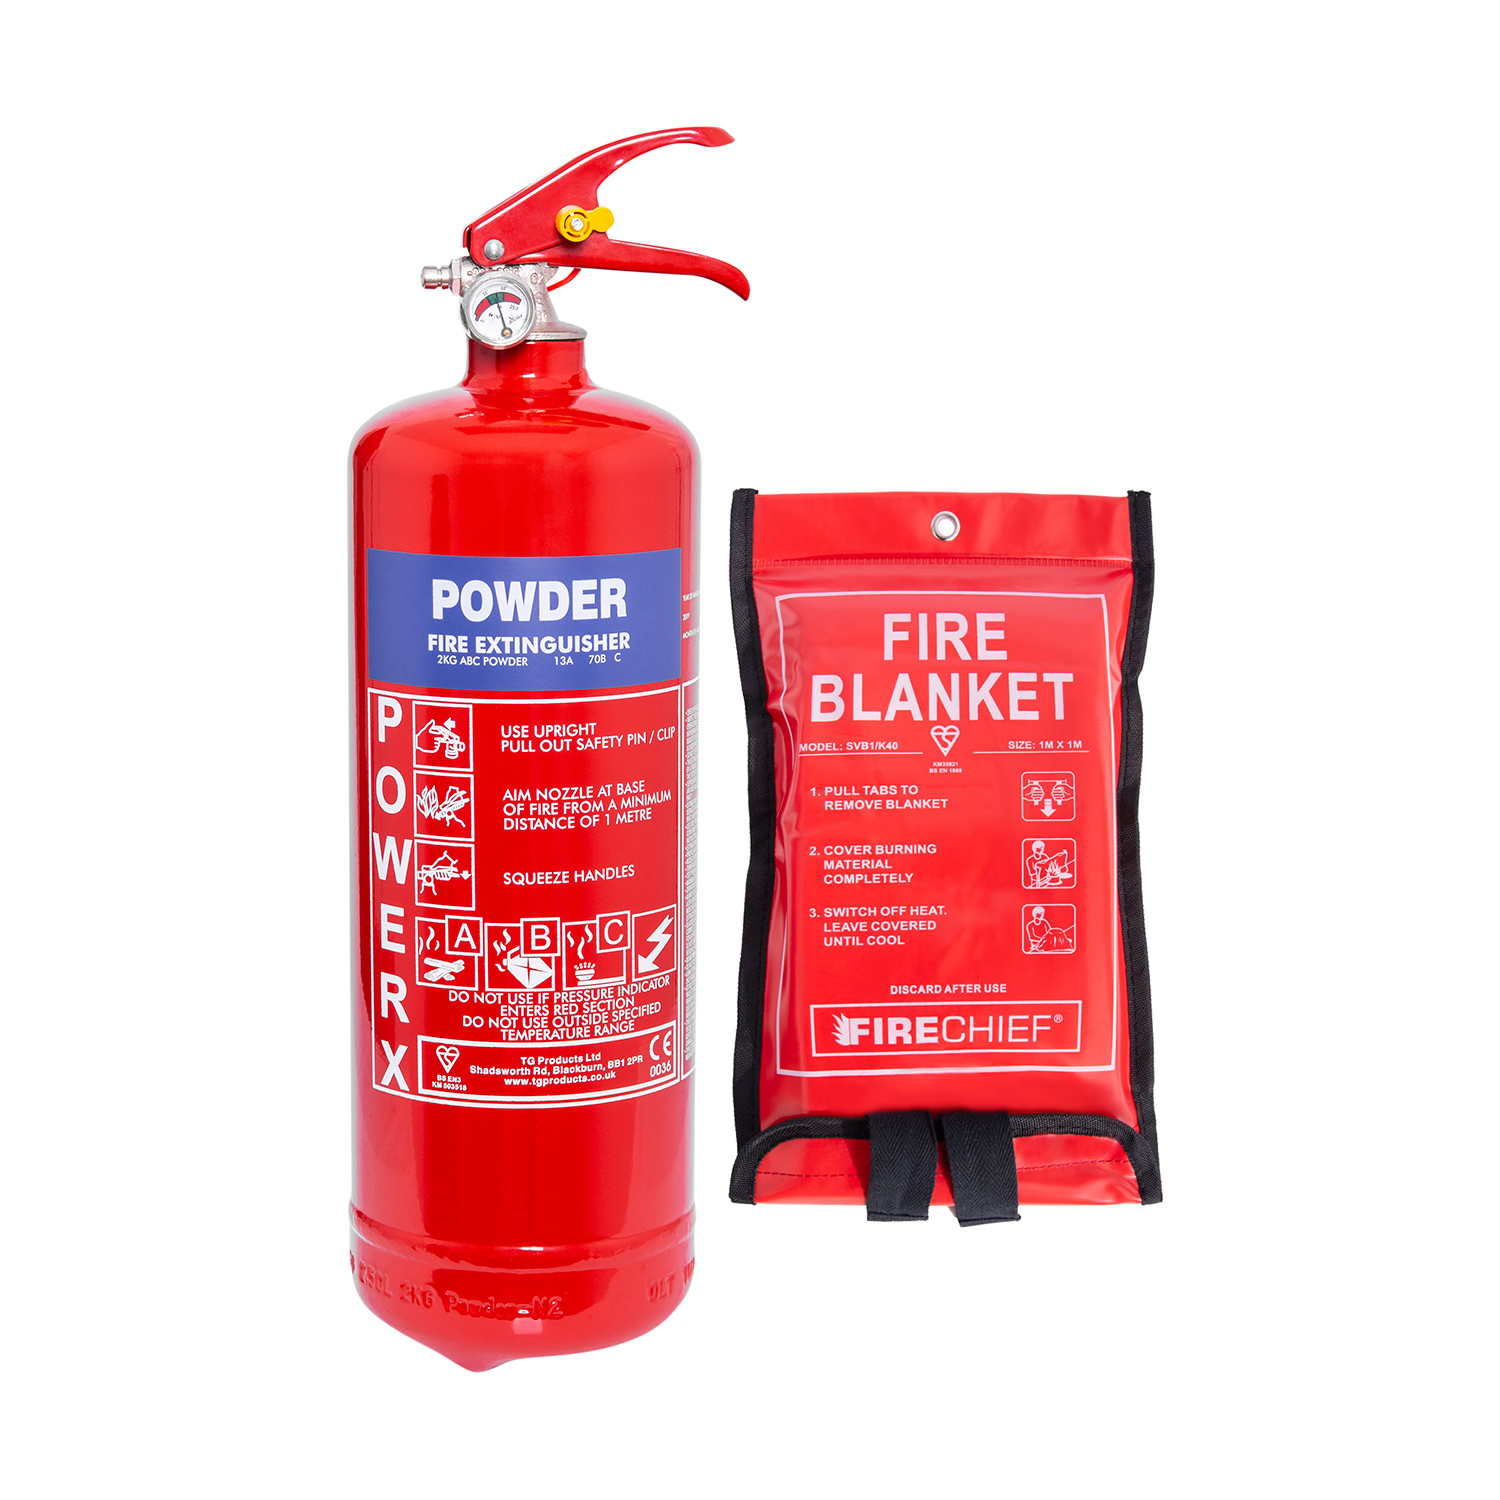 2kg Powder Fire Extinguisher + Fire Blanket Offer